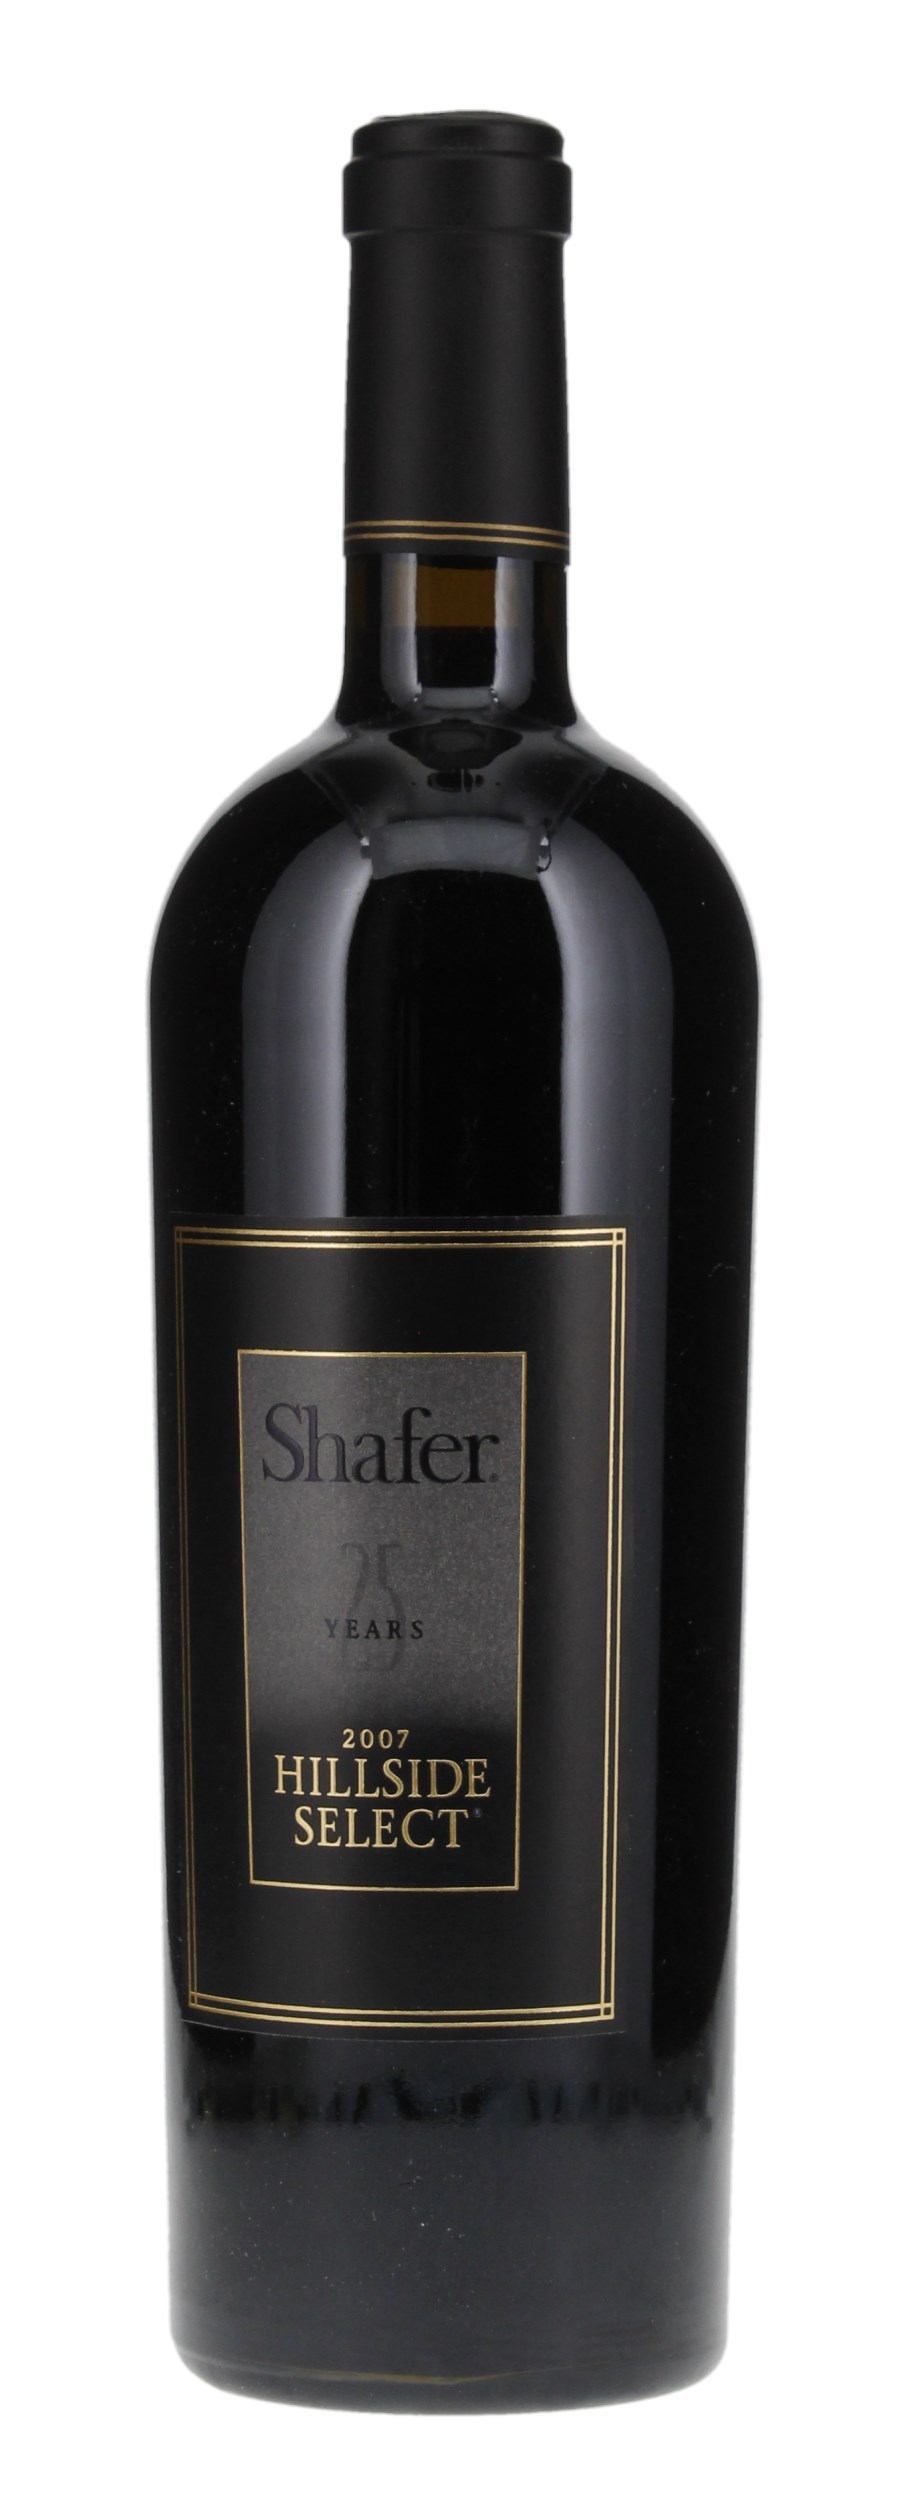 2007 Shafer Vineyards Hillside Select Cabernet Sauvignon, 750ml